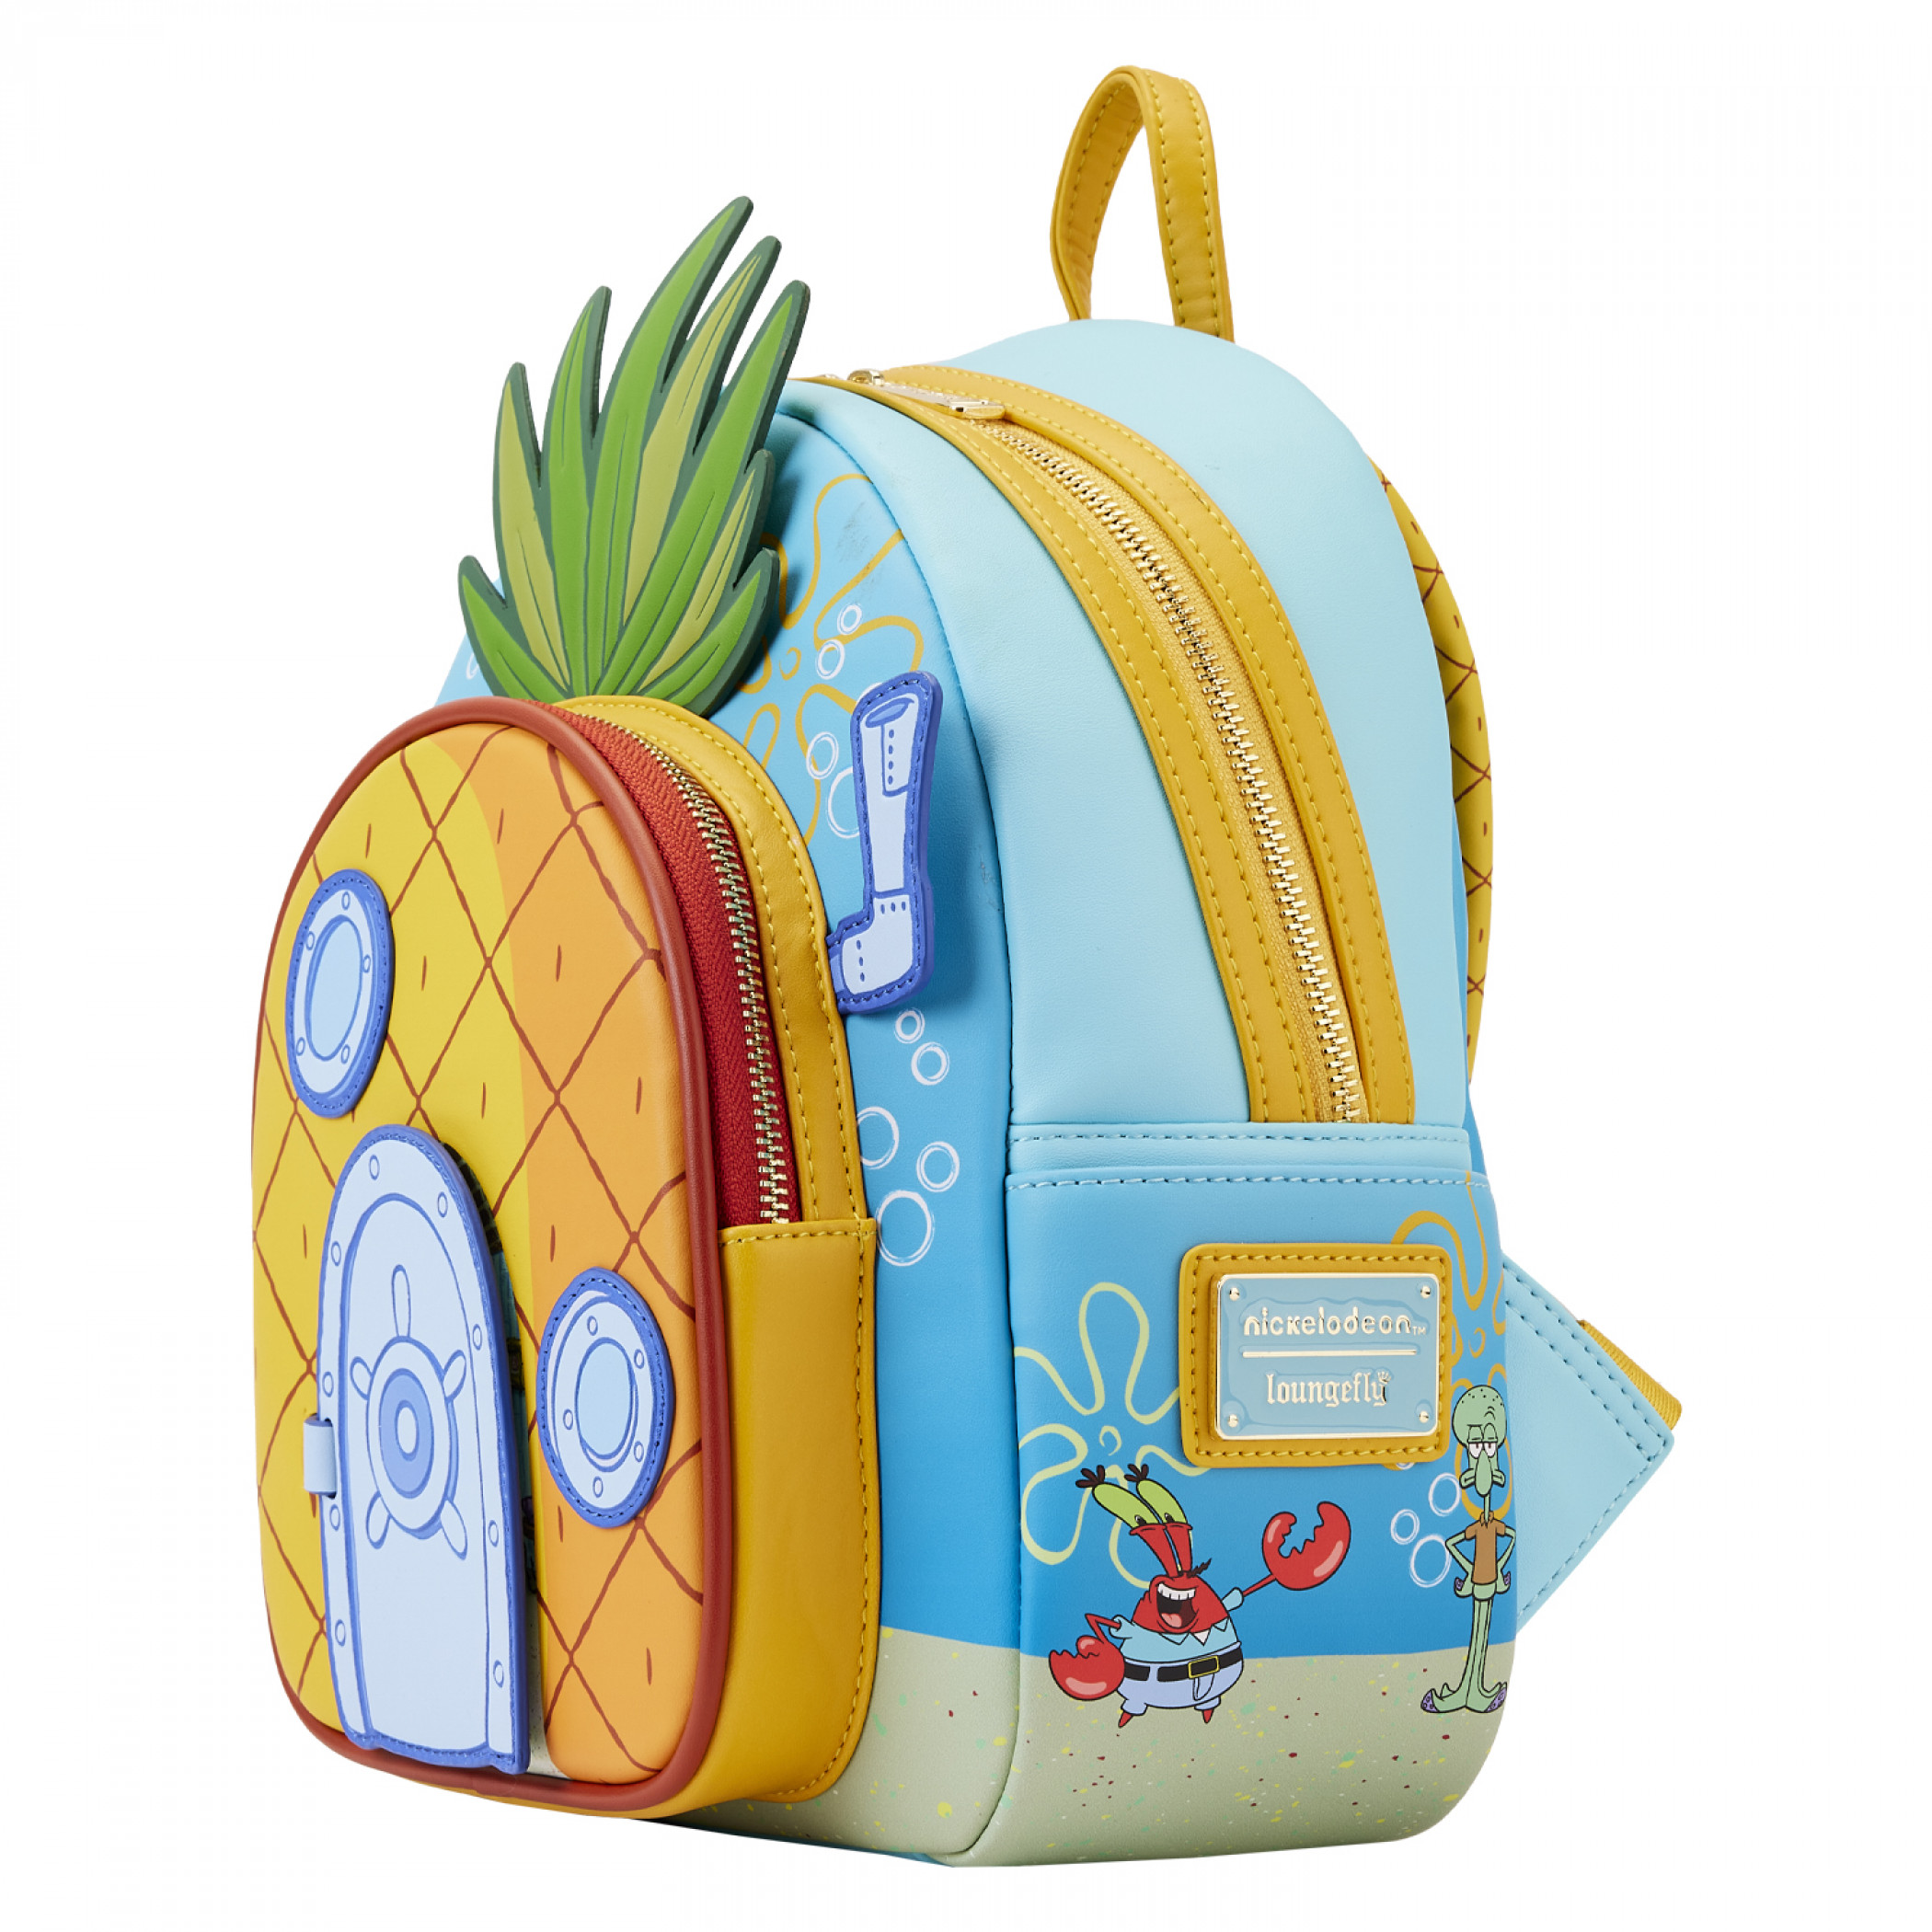 SpongeBob SquarePants' House Mini Backpack by Loungefly